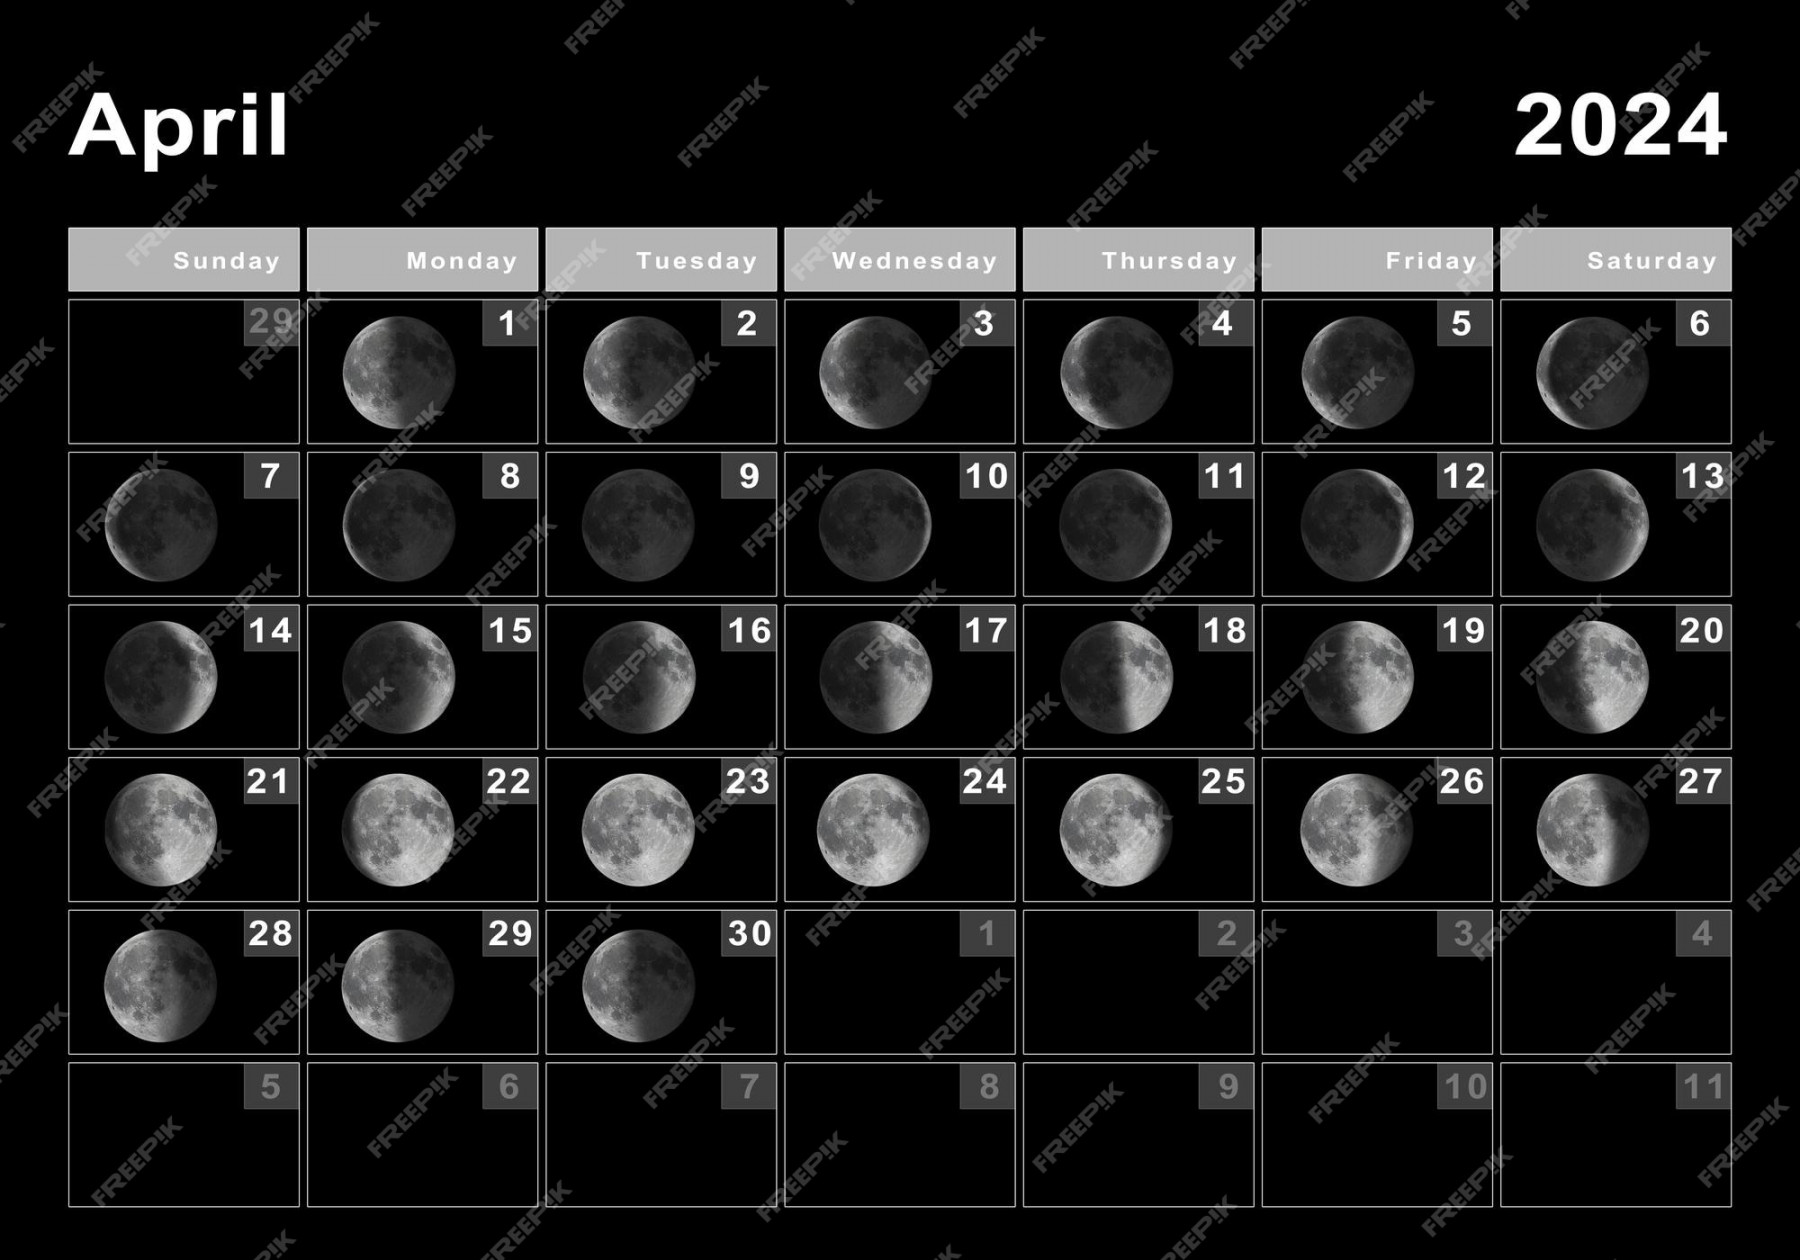 Premium Photo April lunar calendar, moon cycles, moon phases